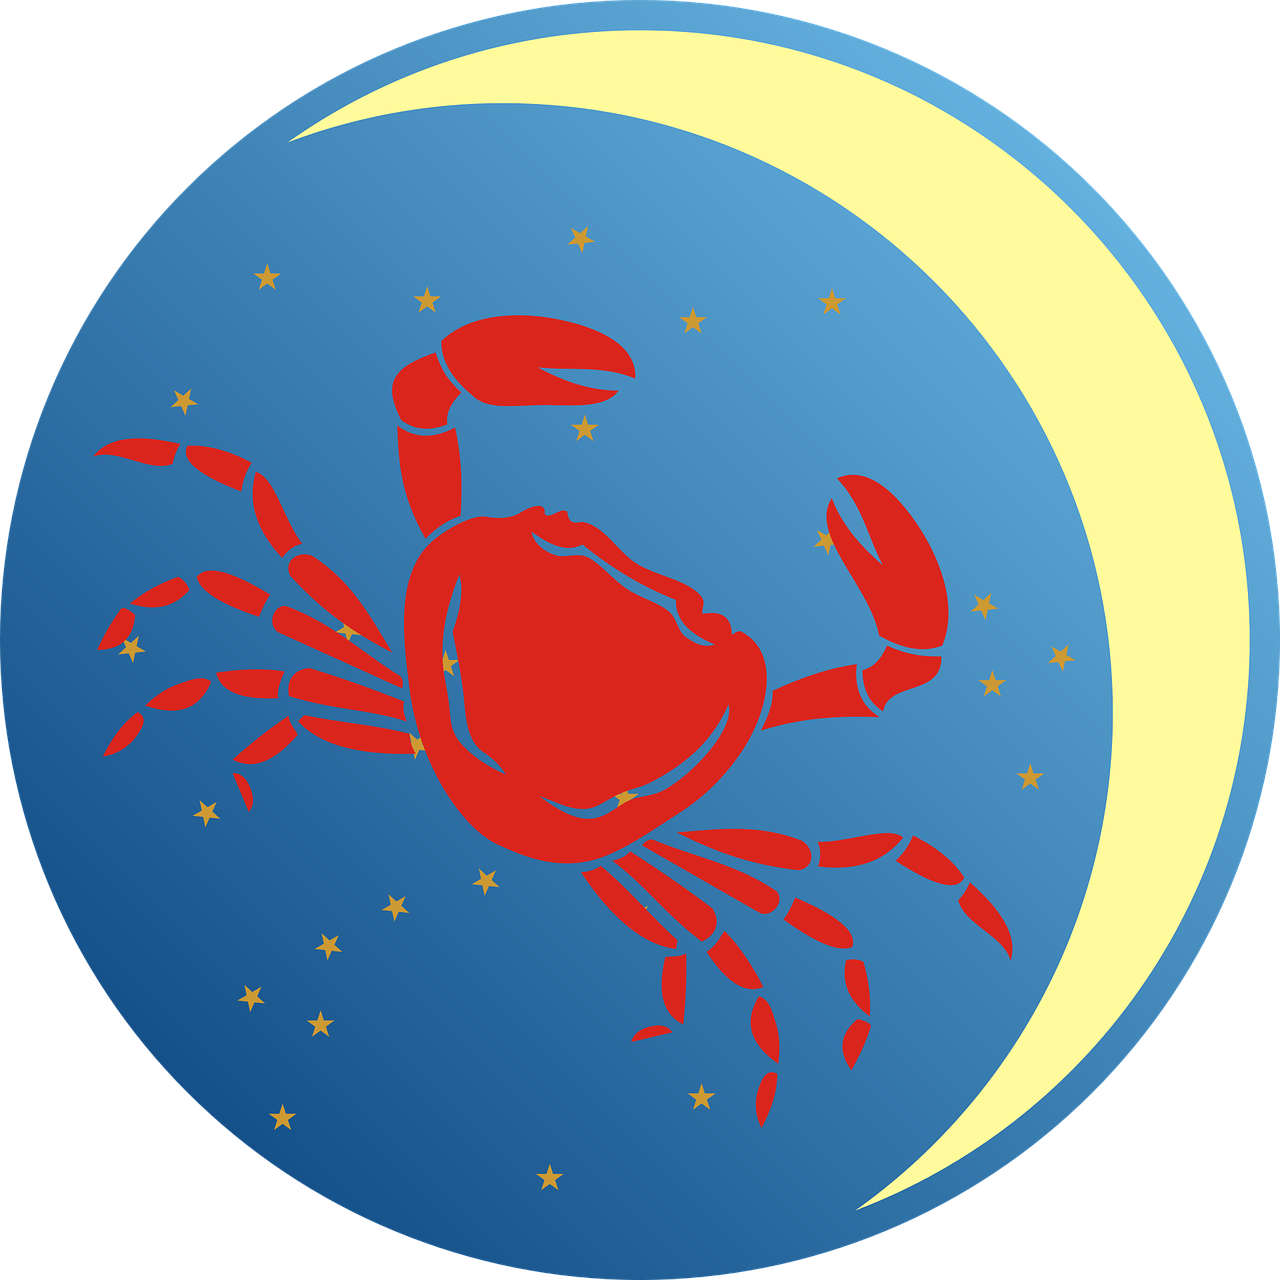 Illustration of the zodiac sign Cancer | Source: Pixabay